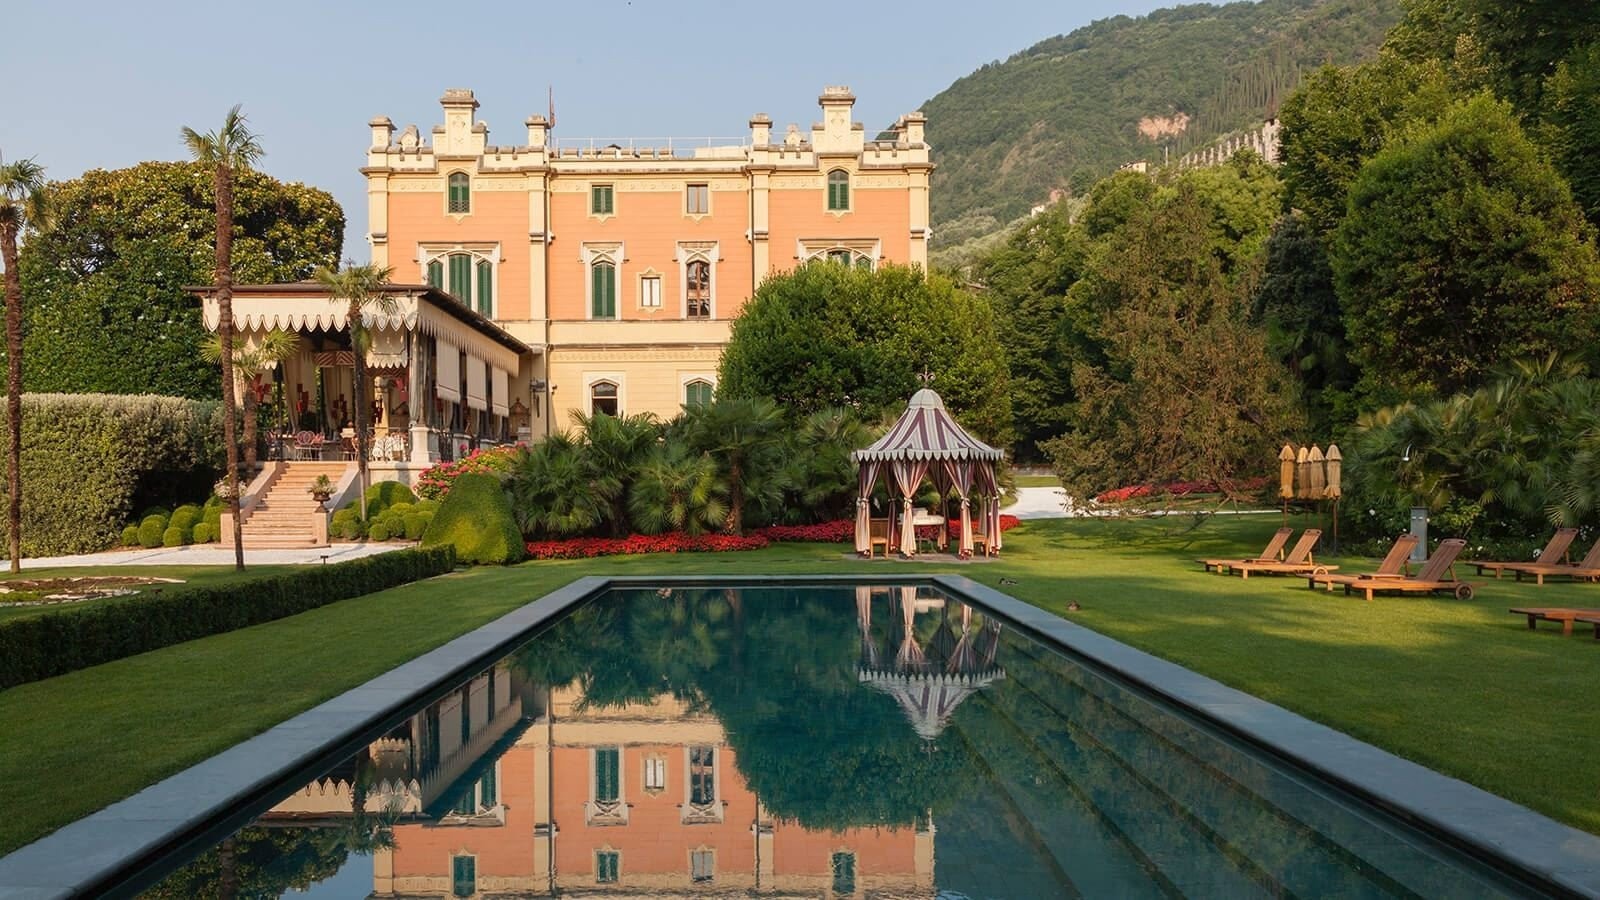 0000220-gand-hotel-a-villa-feltrinelli-the-pool-and-the-garden.jpeg